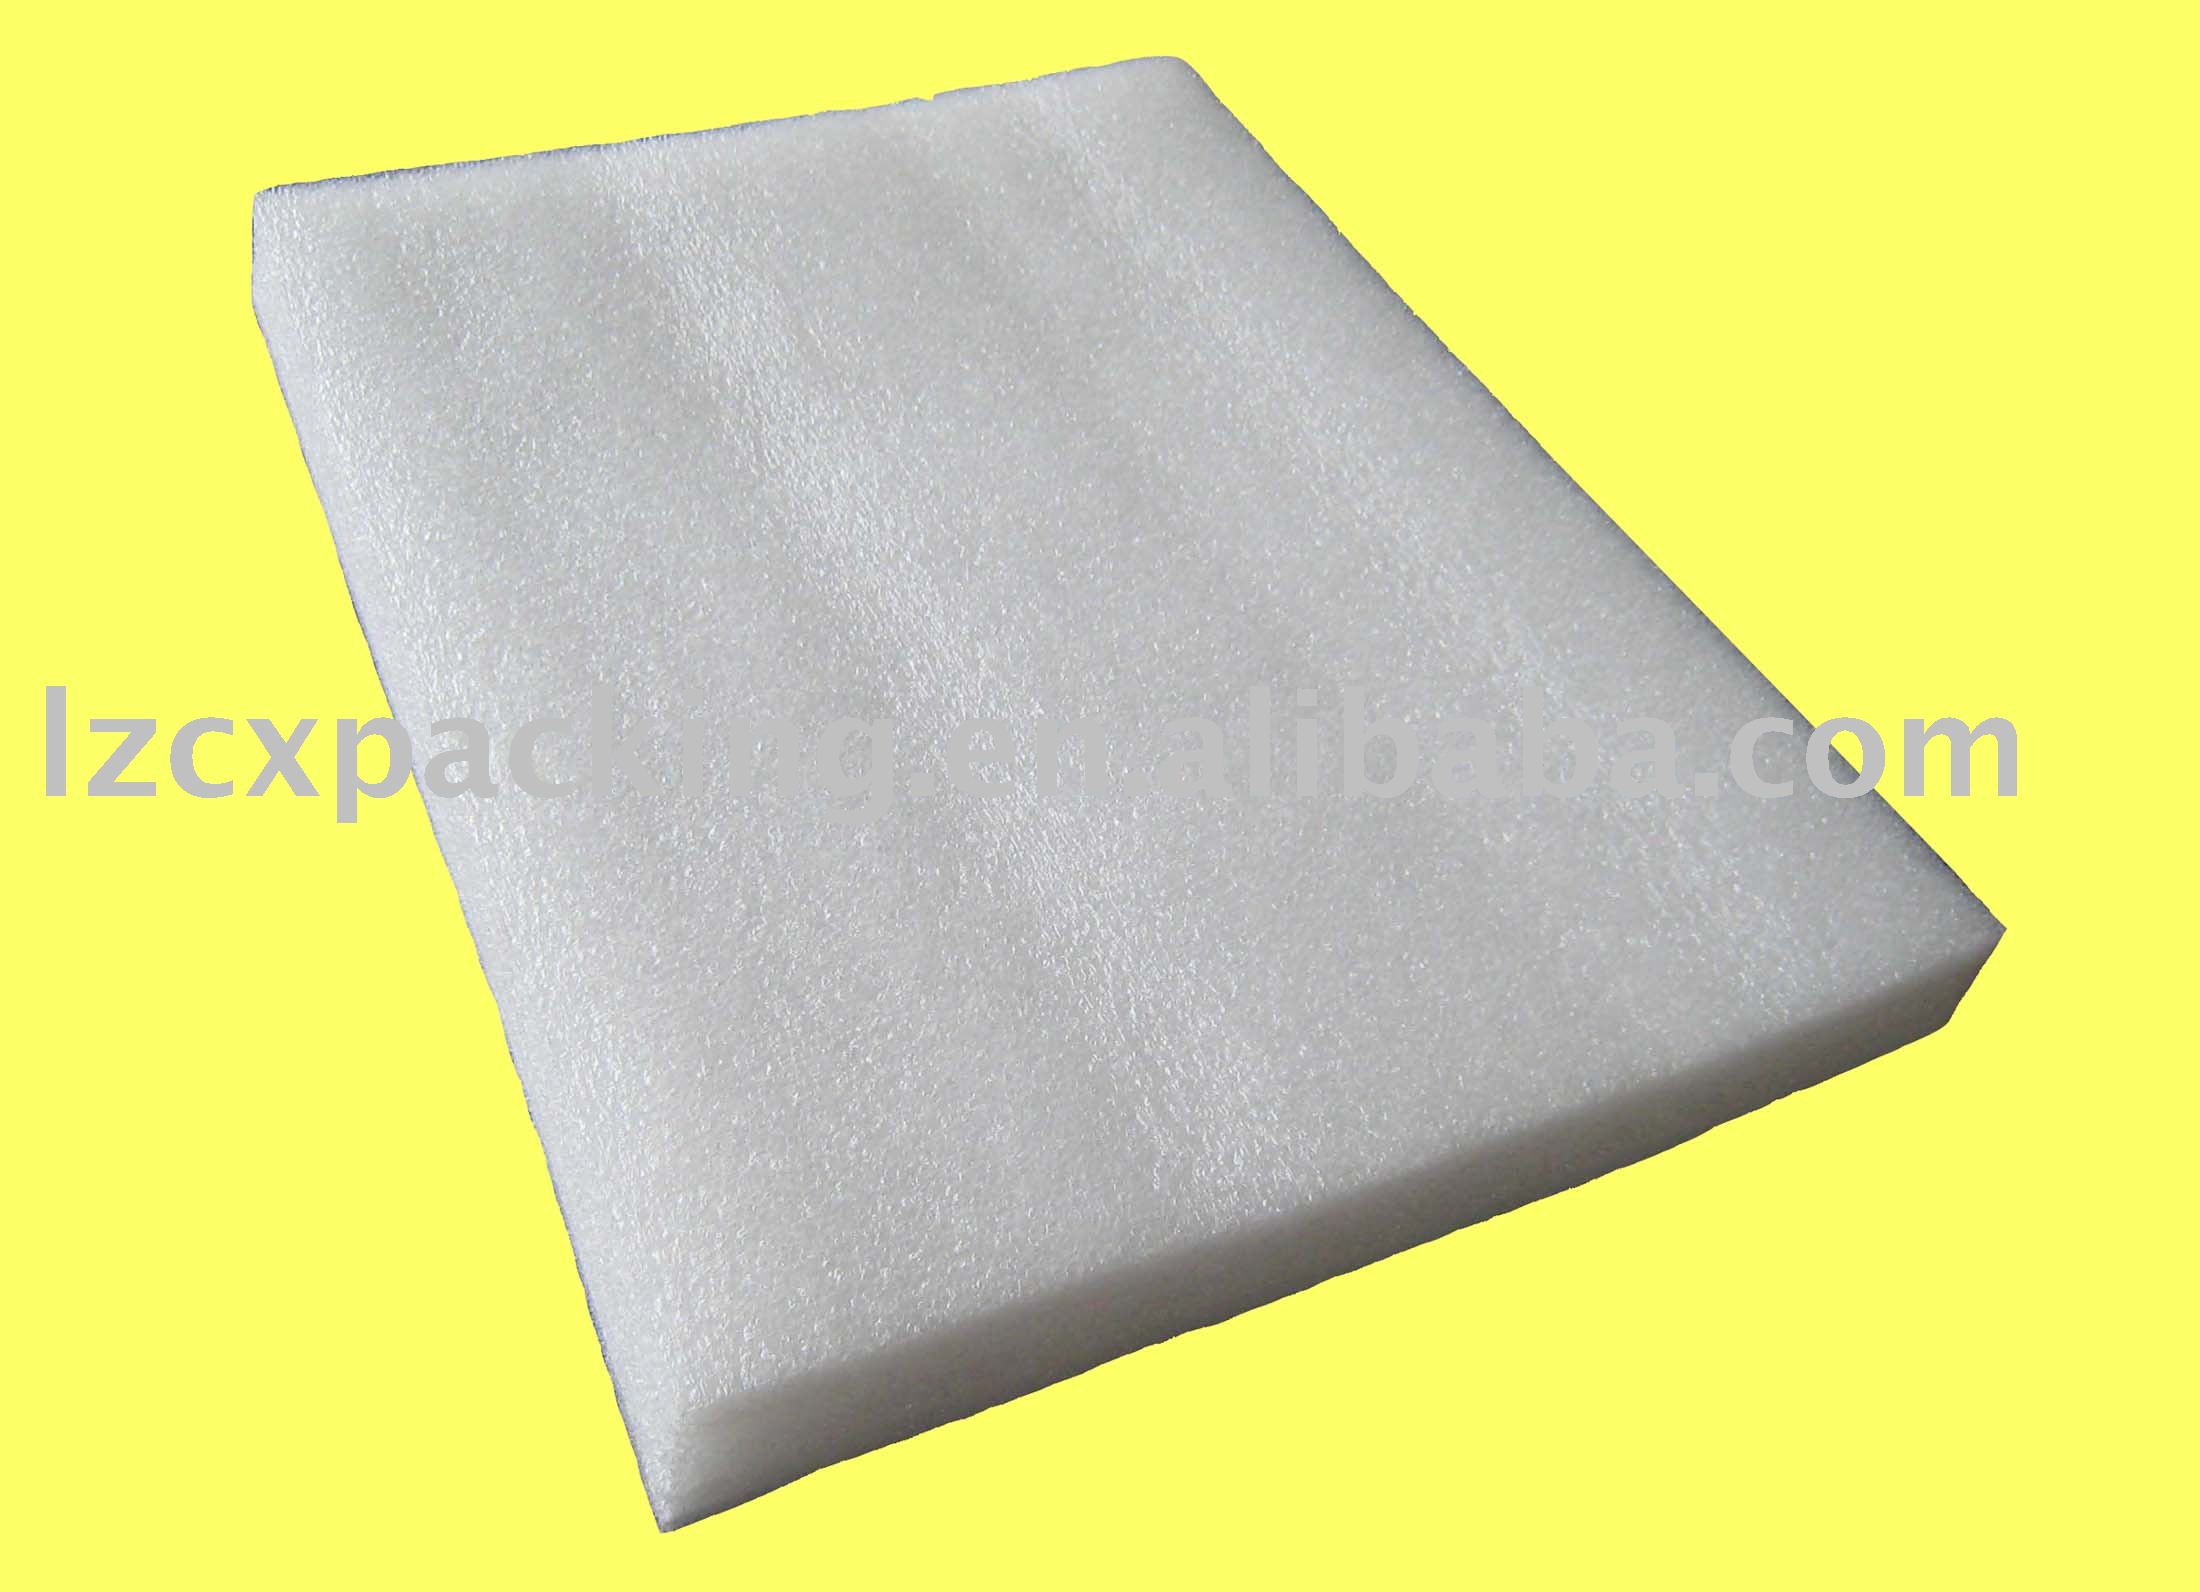 52mm White Laminated Epe Packing Foam - Buy Packing,Foam,Packing ...